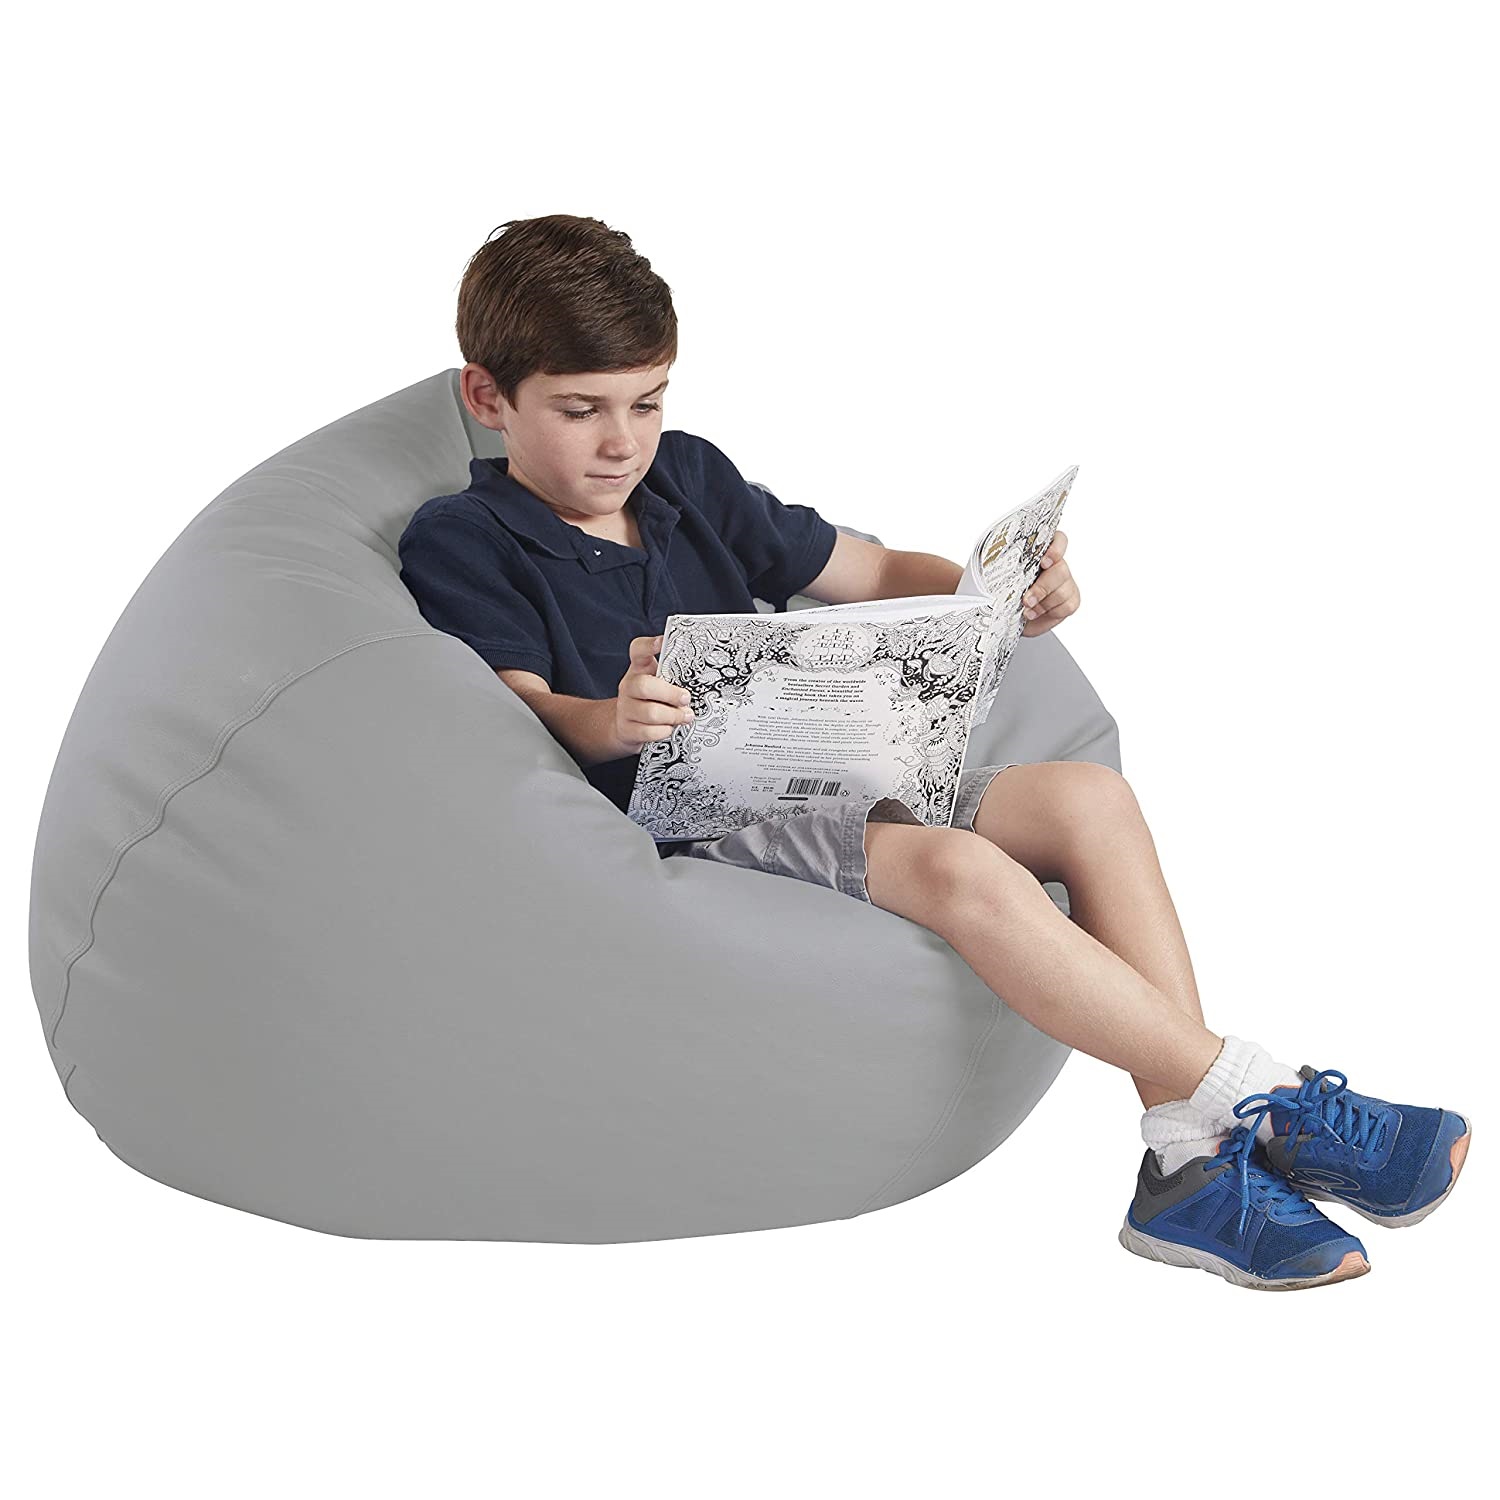 FDP SoftScape Classic 35" Junior Bean Bag Chair, Furniture for Kids